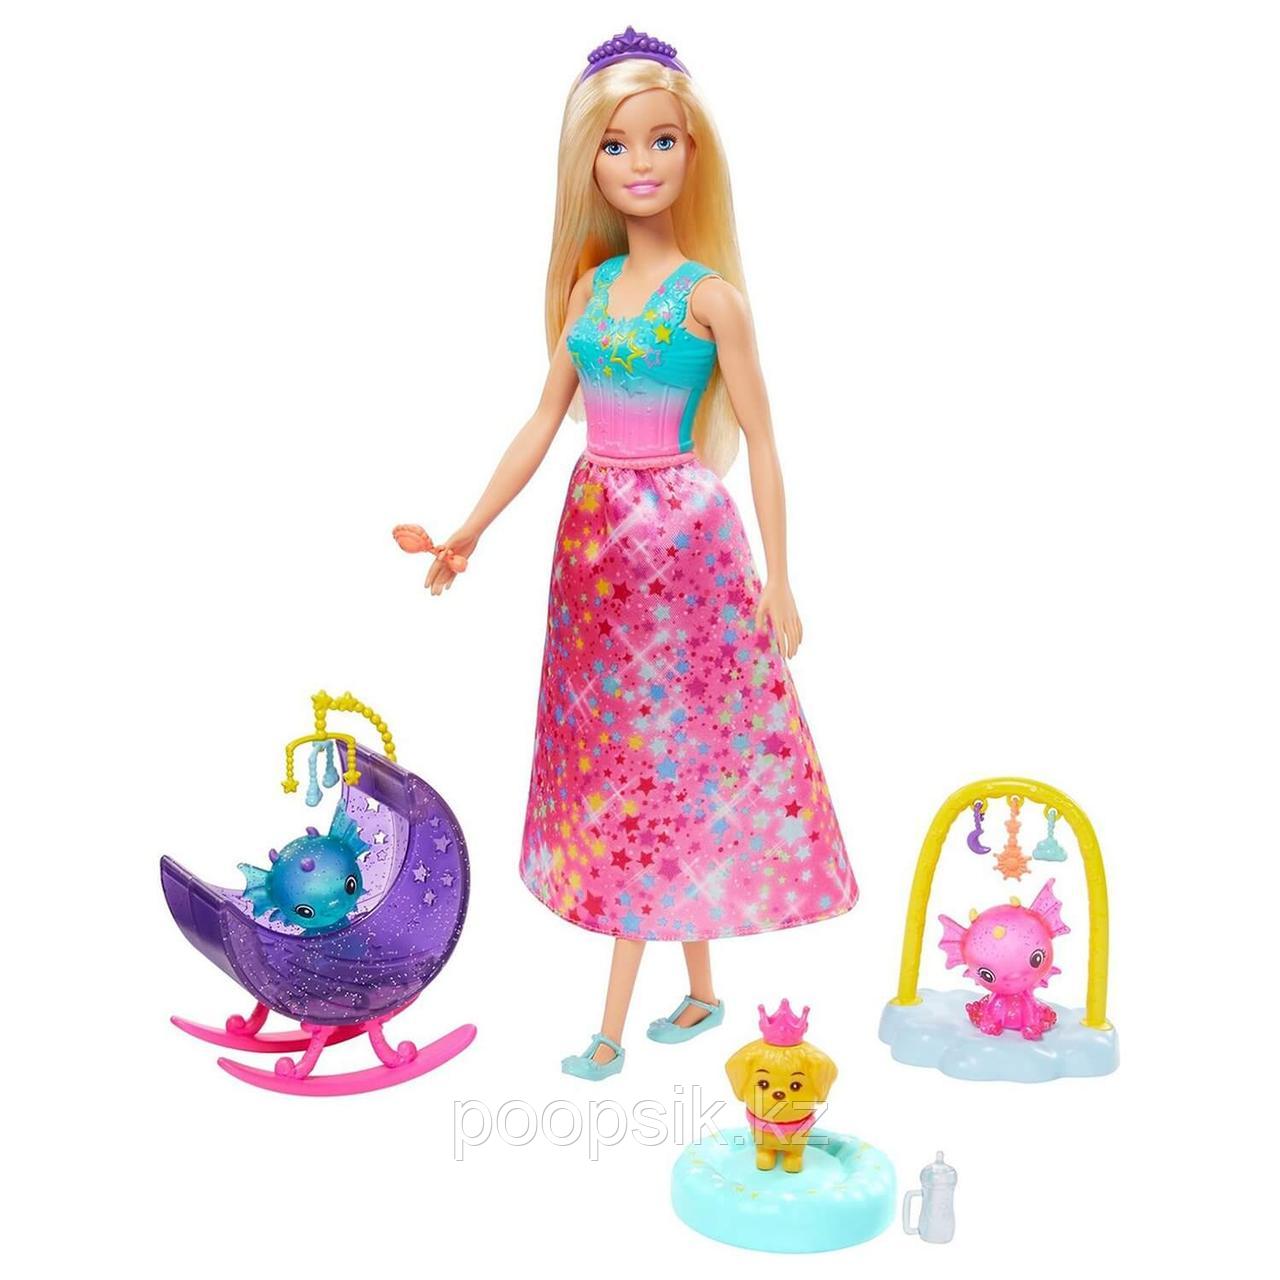 Barbie Dreamtopia Заботливая принцесса Барби Детский сад для драконов GJK51